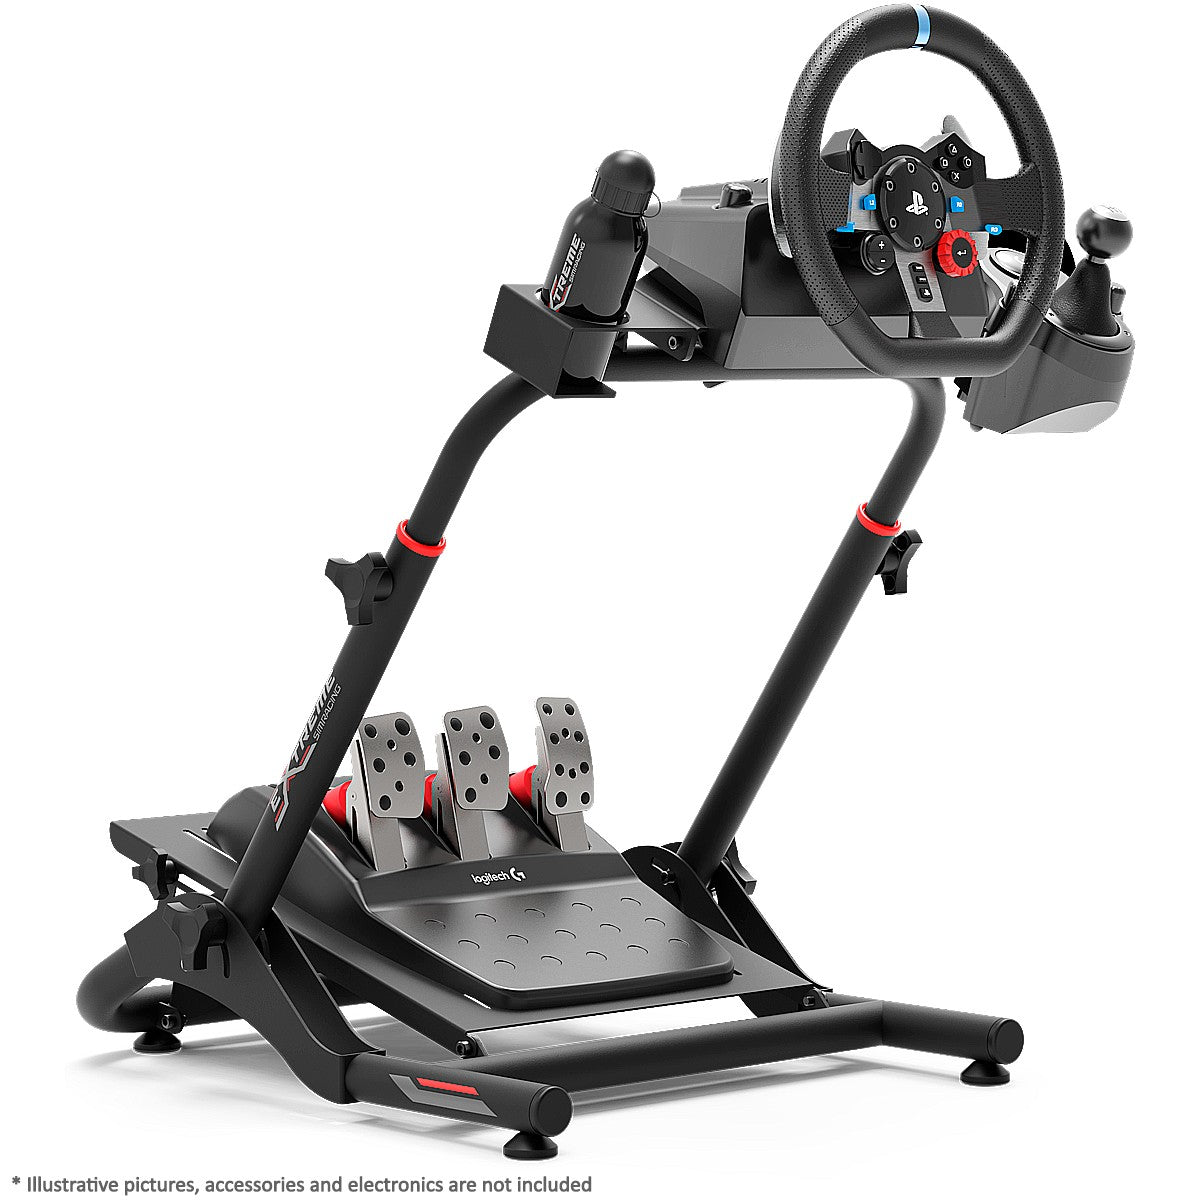  Extreme Sim Racing Wheel Stand Cockpit SGT Racing Simulator -  Nardo Gray Edition For Logitech G25, G27, G29, G920, G923 Thrustmaster and  Fanatec - WHEEL LOCKS INCLUDED (Nardo Gray) : Video Games